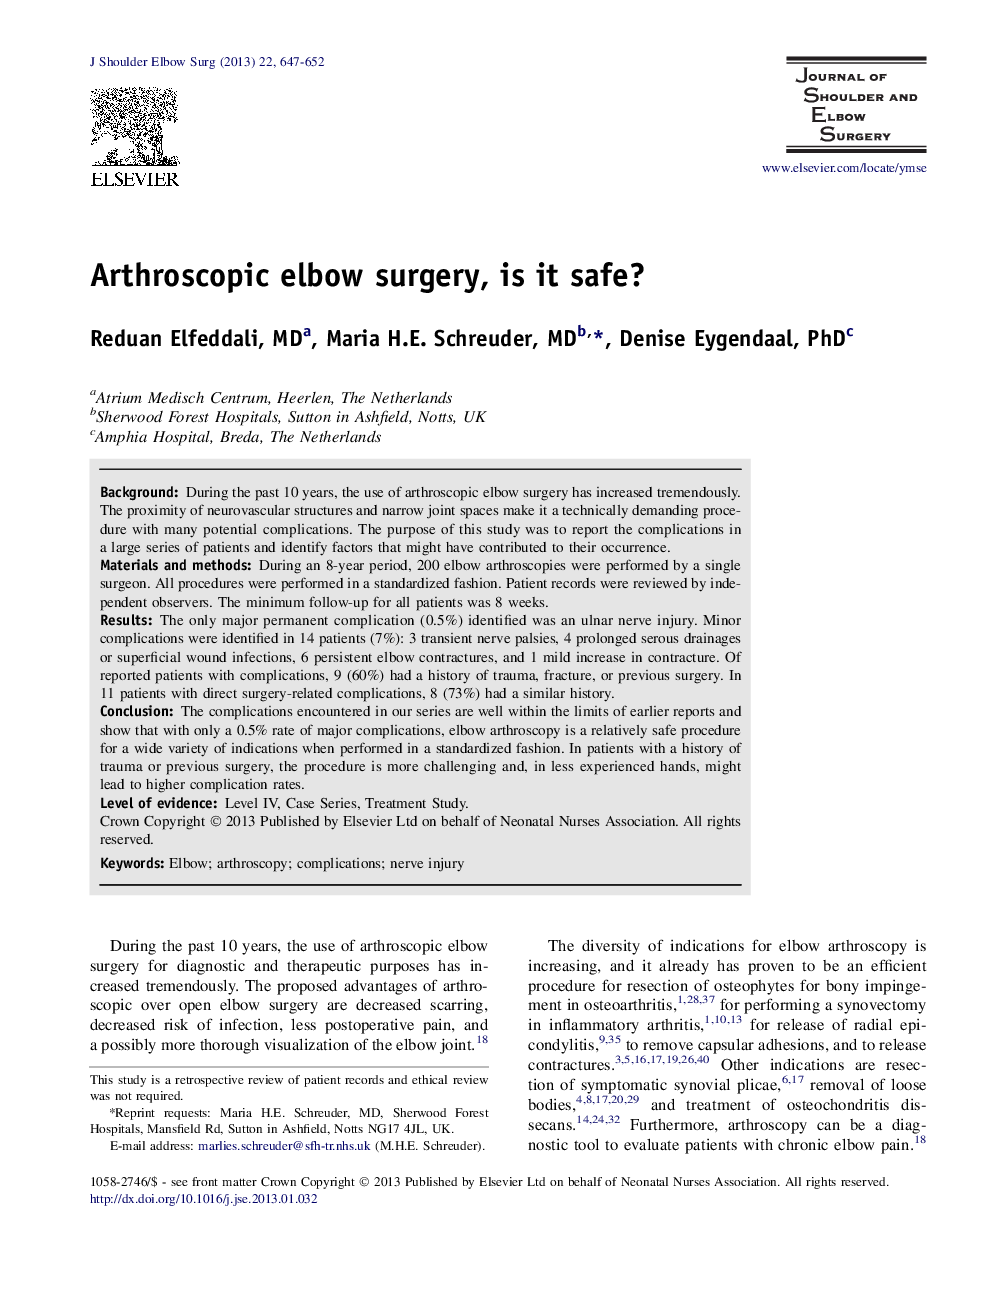 Arthroscopic elbow surgery, is it safe? 